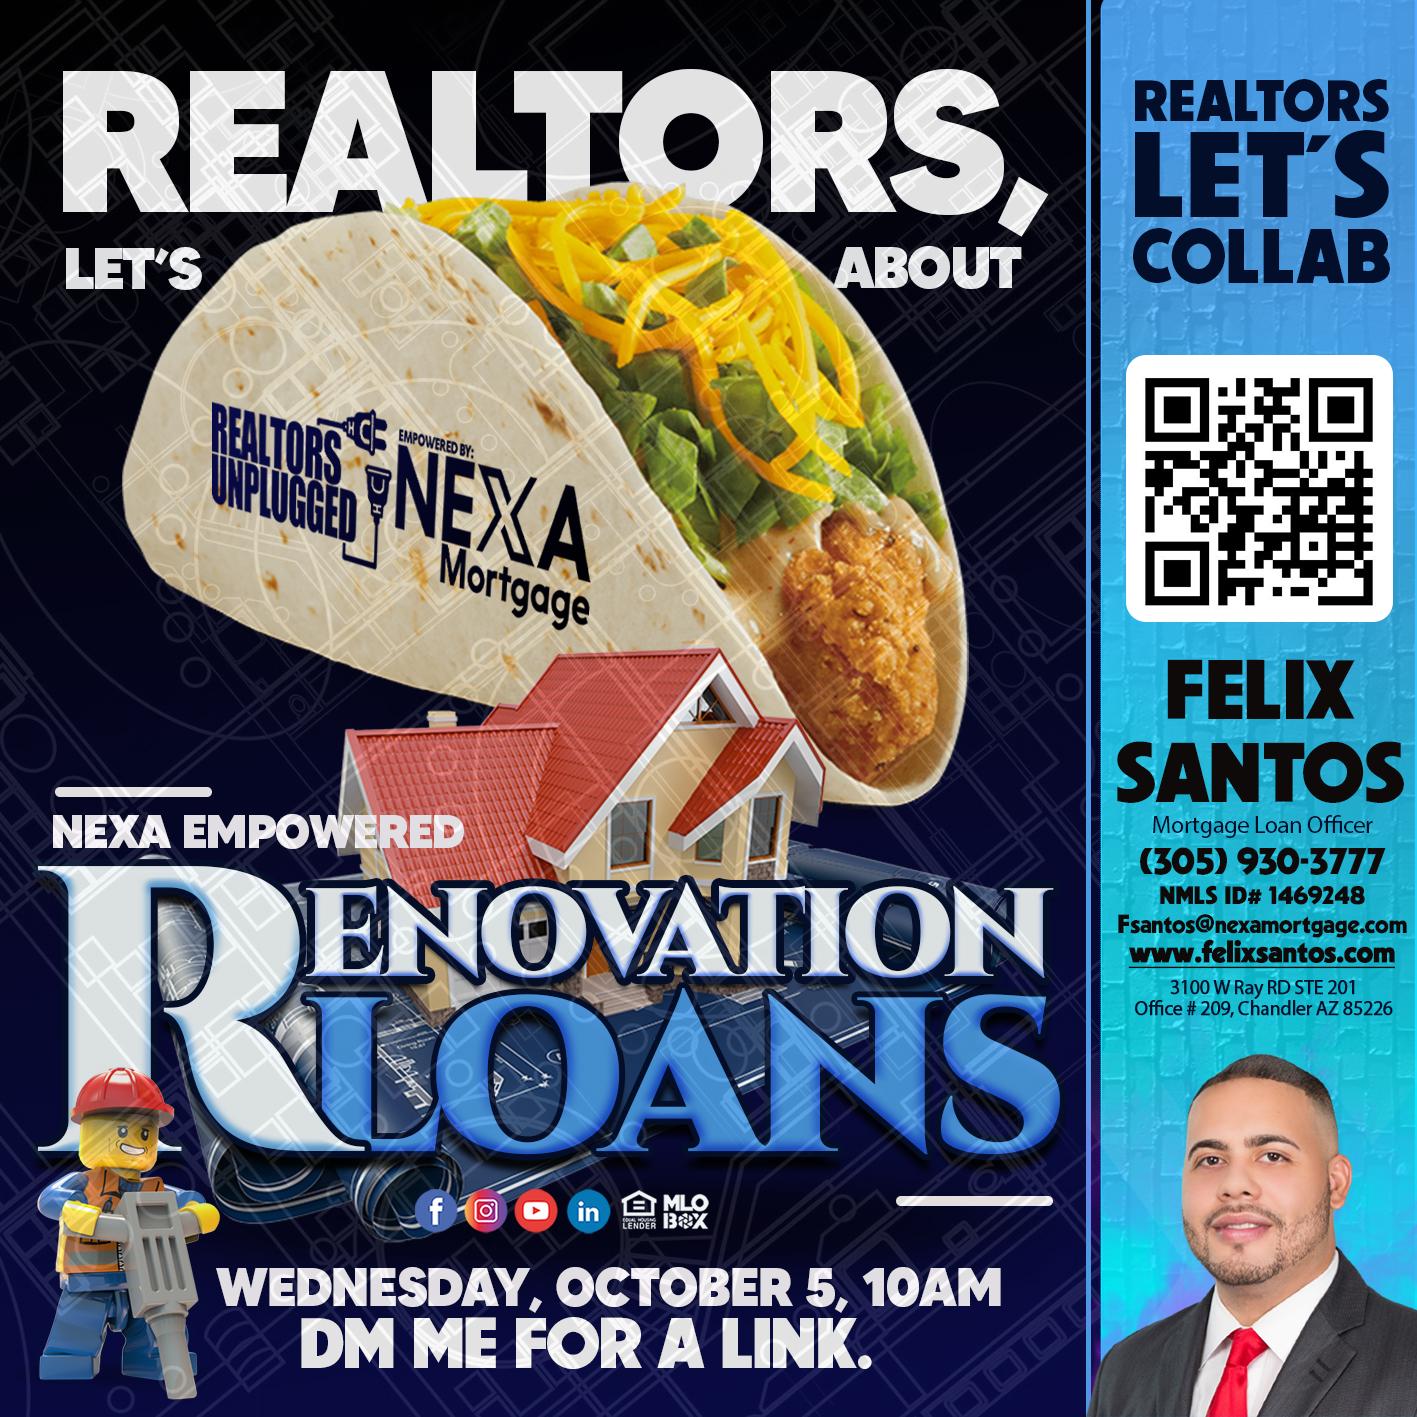 REALTORS LETS TACO ABOUT - Felix Santos -Mortgage Loan Officer